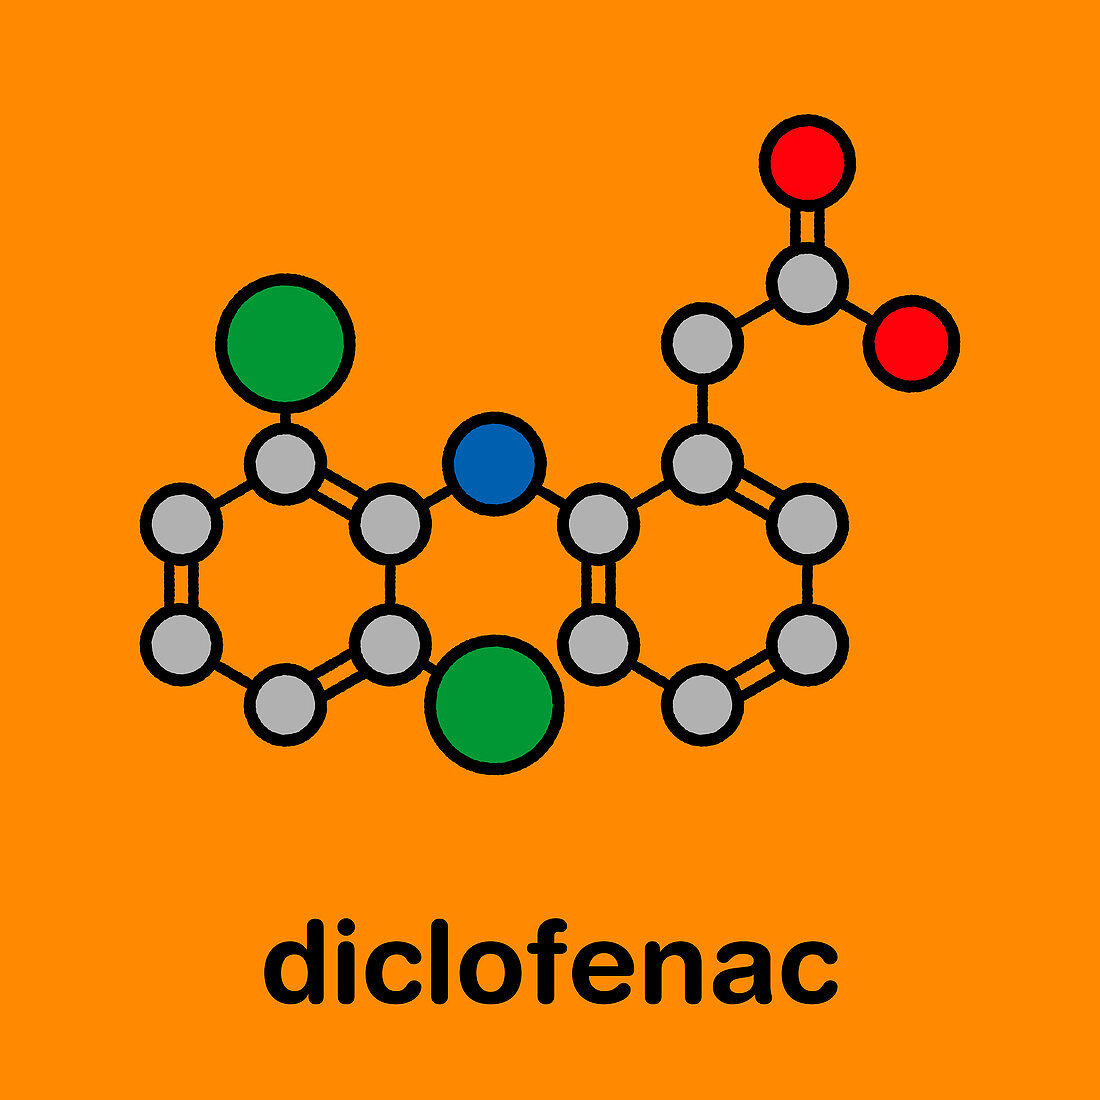 Diclofenac pain and inflammation drug, molecular model